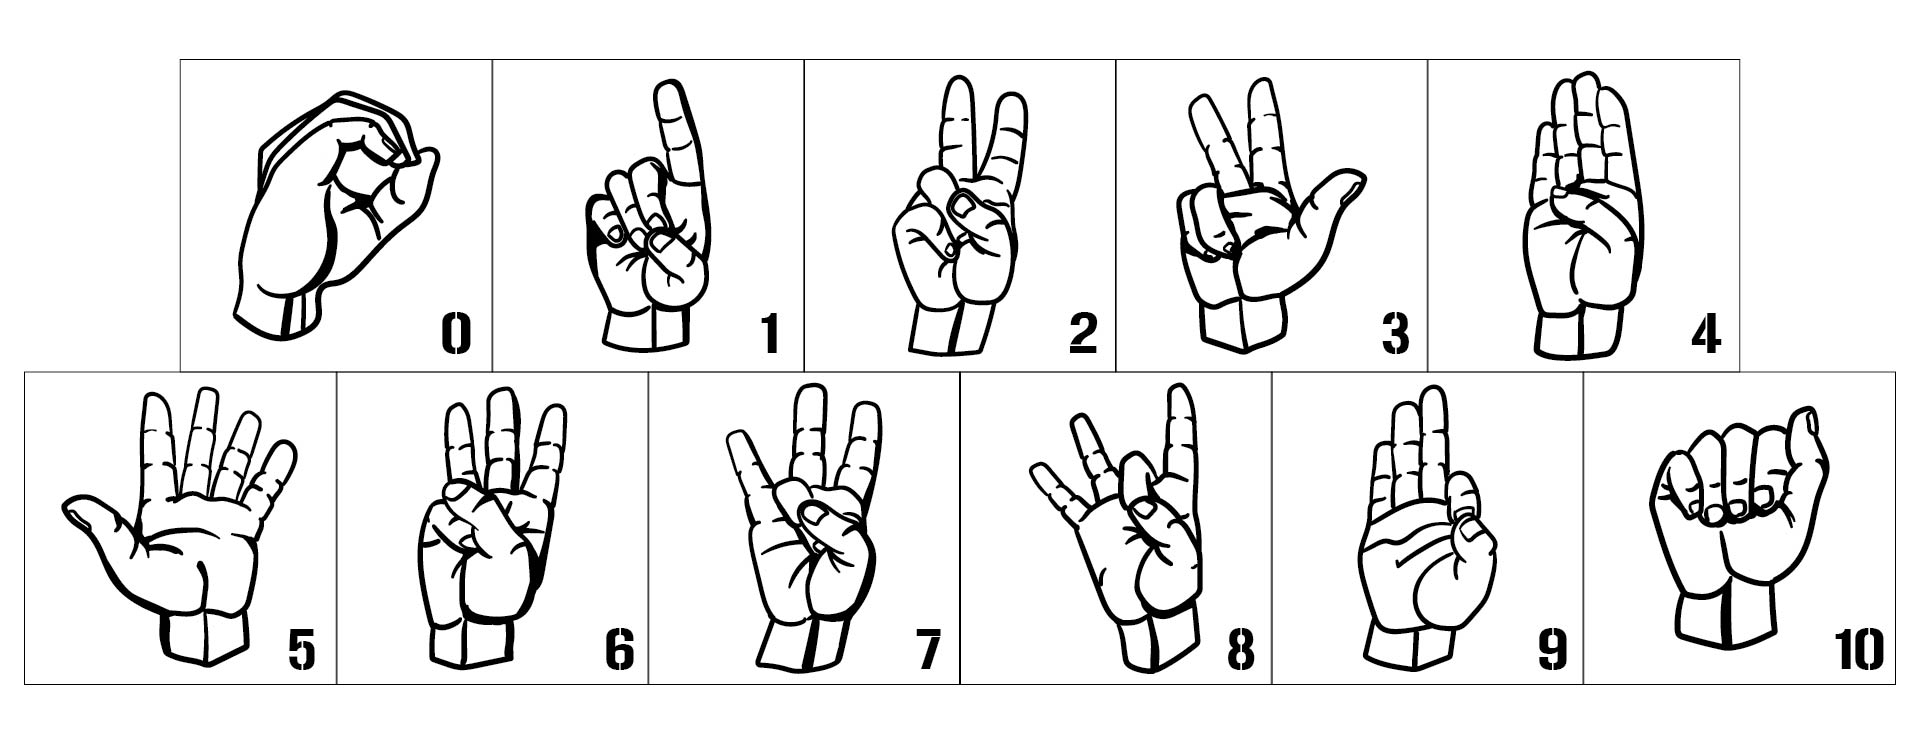 Printable Sign Language Numbers Chart